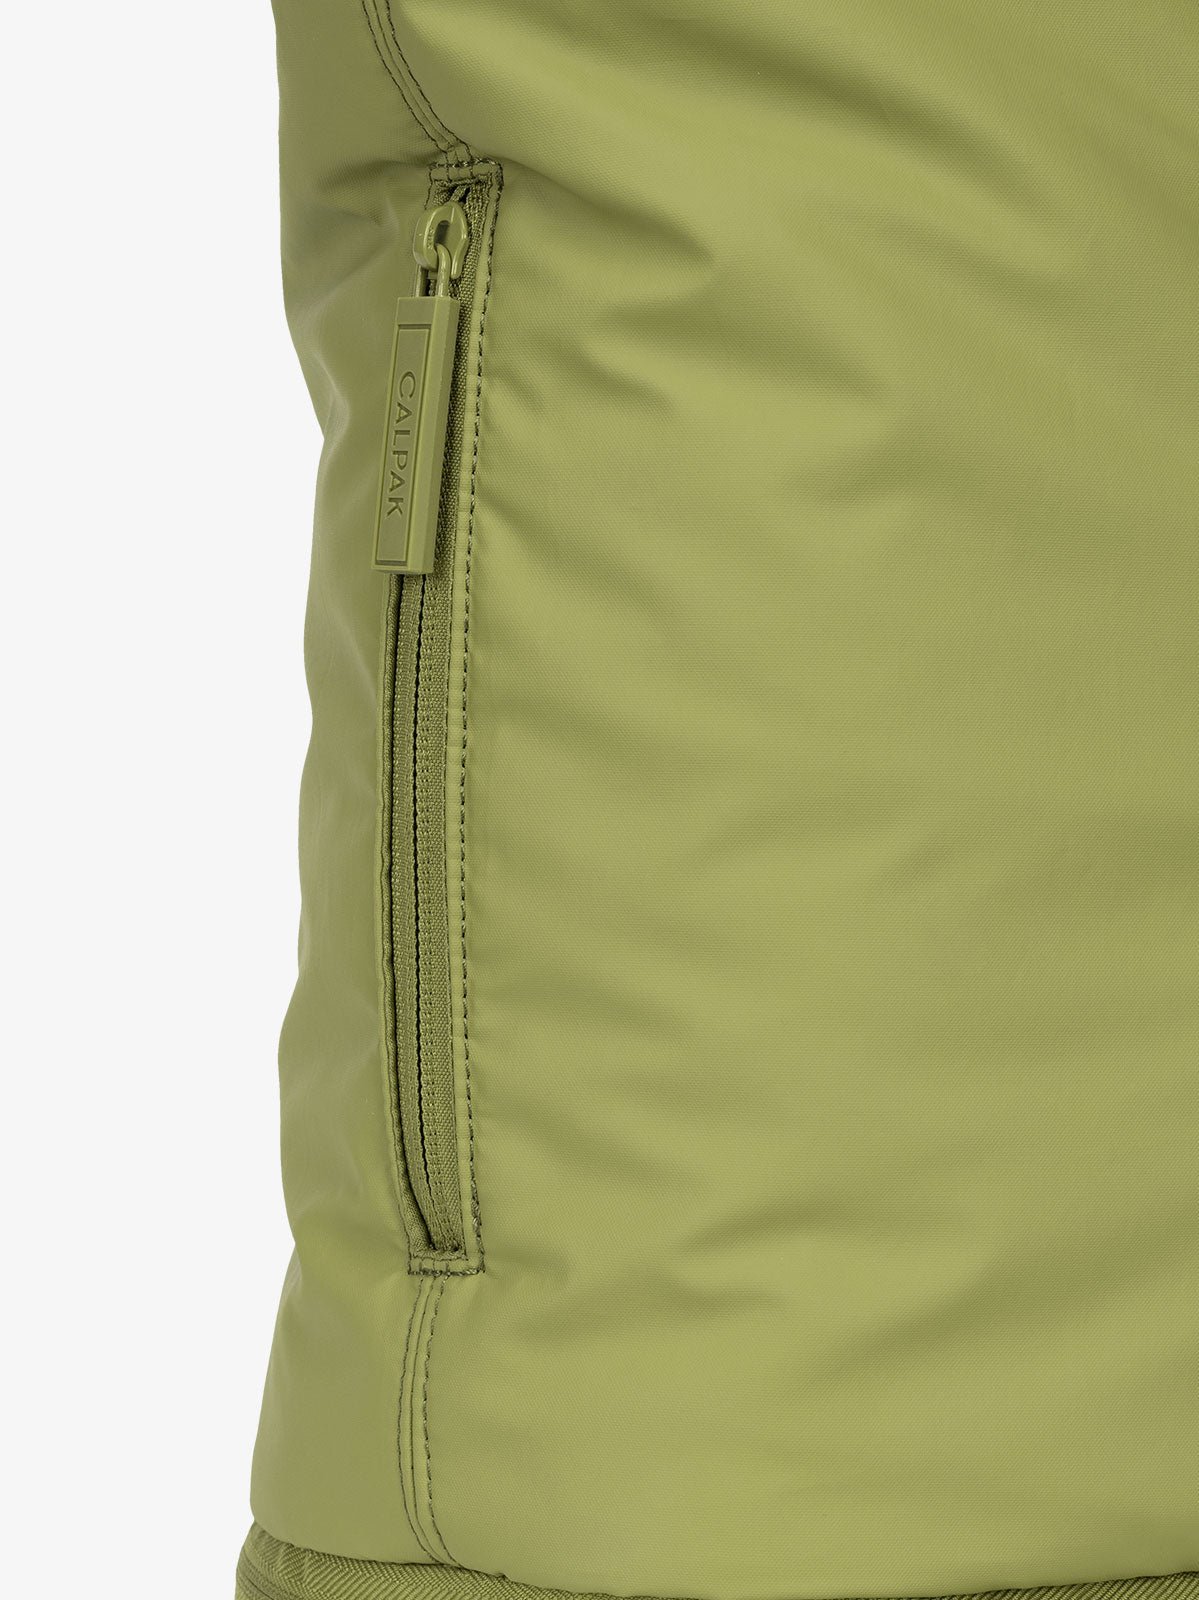 CALPAK Luka expandable laptop bag with hidden zippered pockets in green